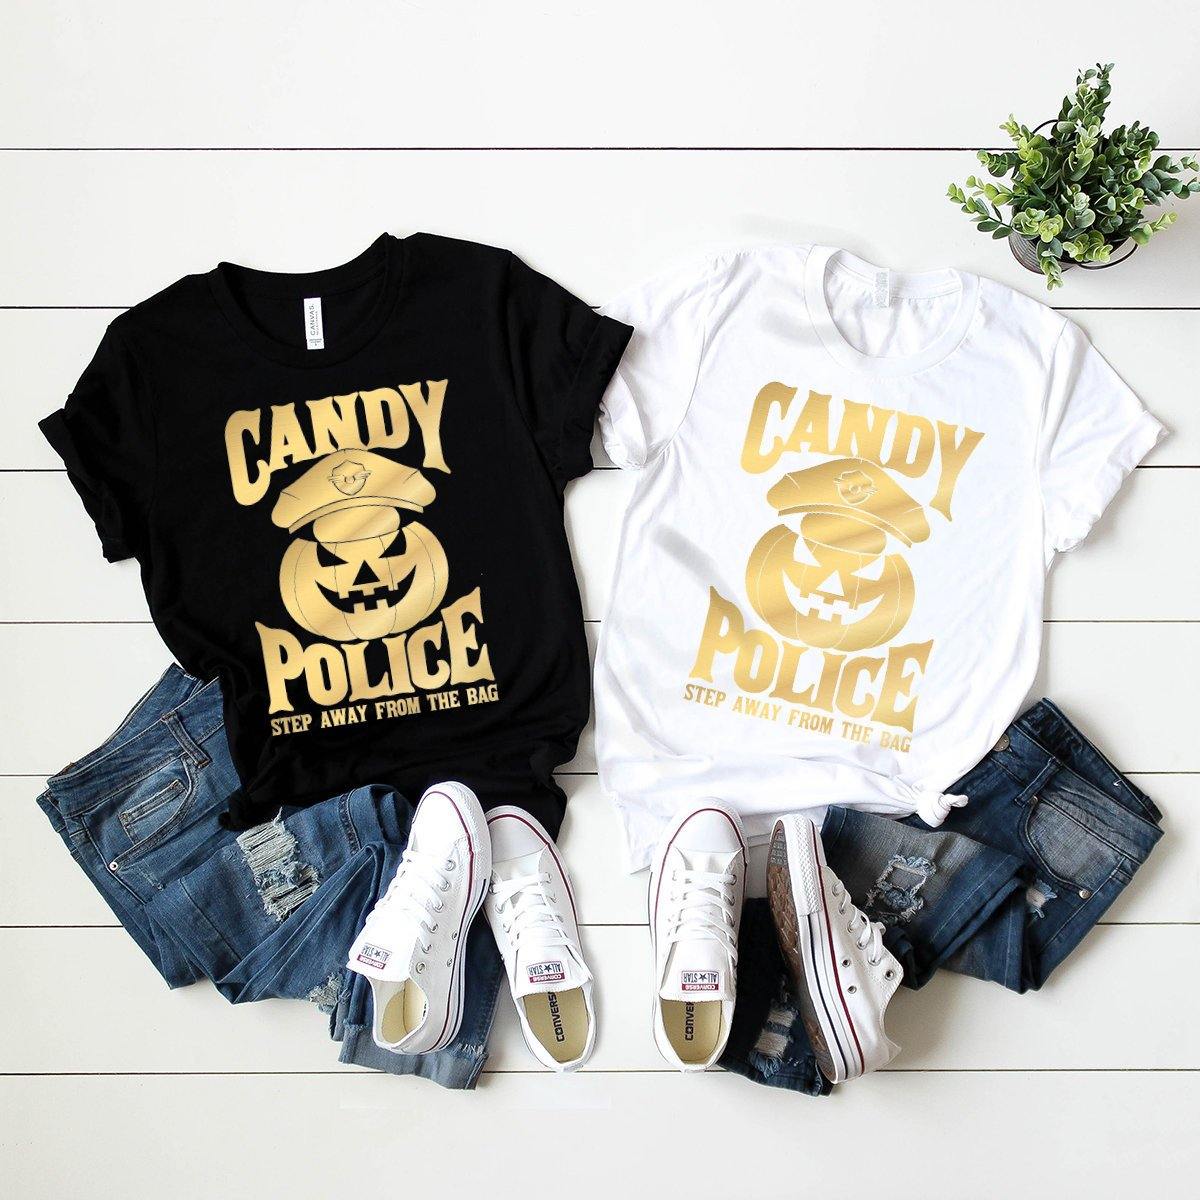 Pumpkin Smile Tee: Hilarious Cotton T-Shirt Design – Bad Idea T Shirts